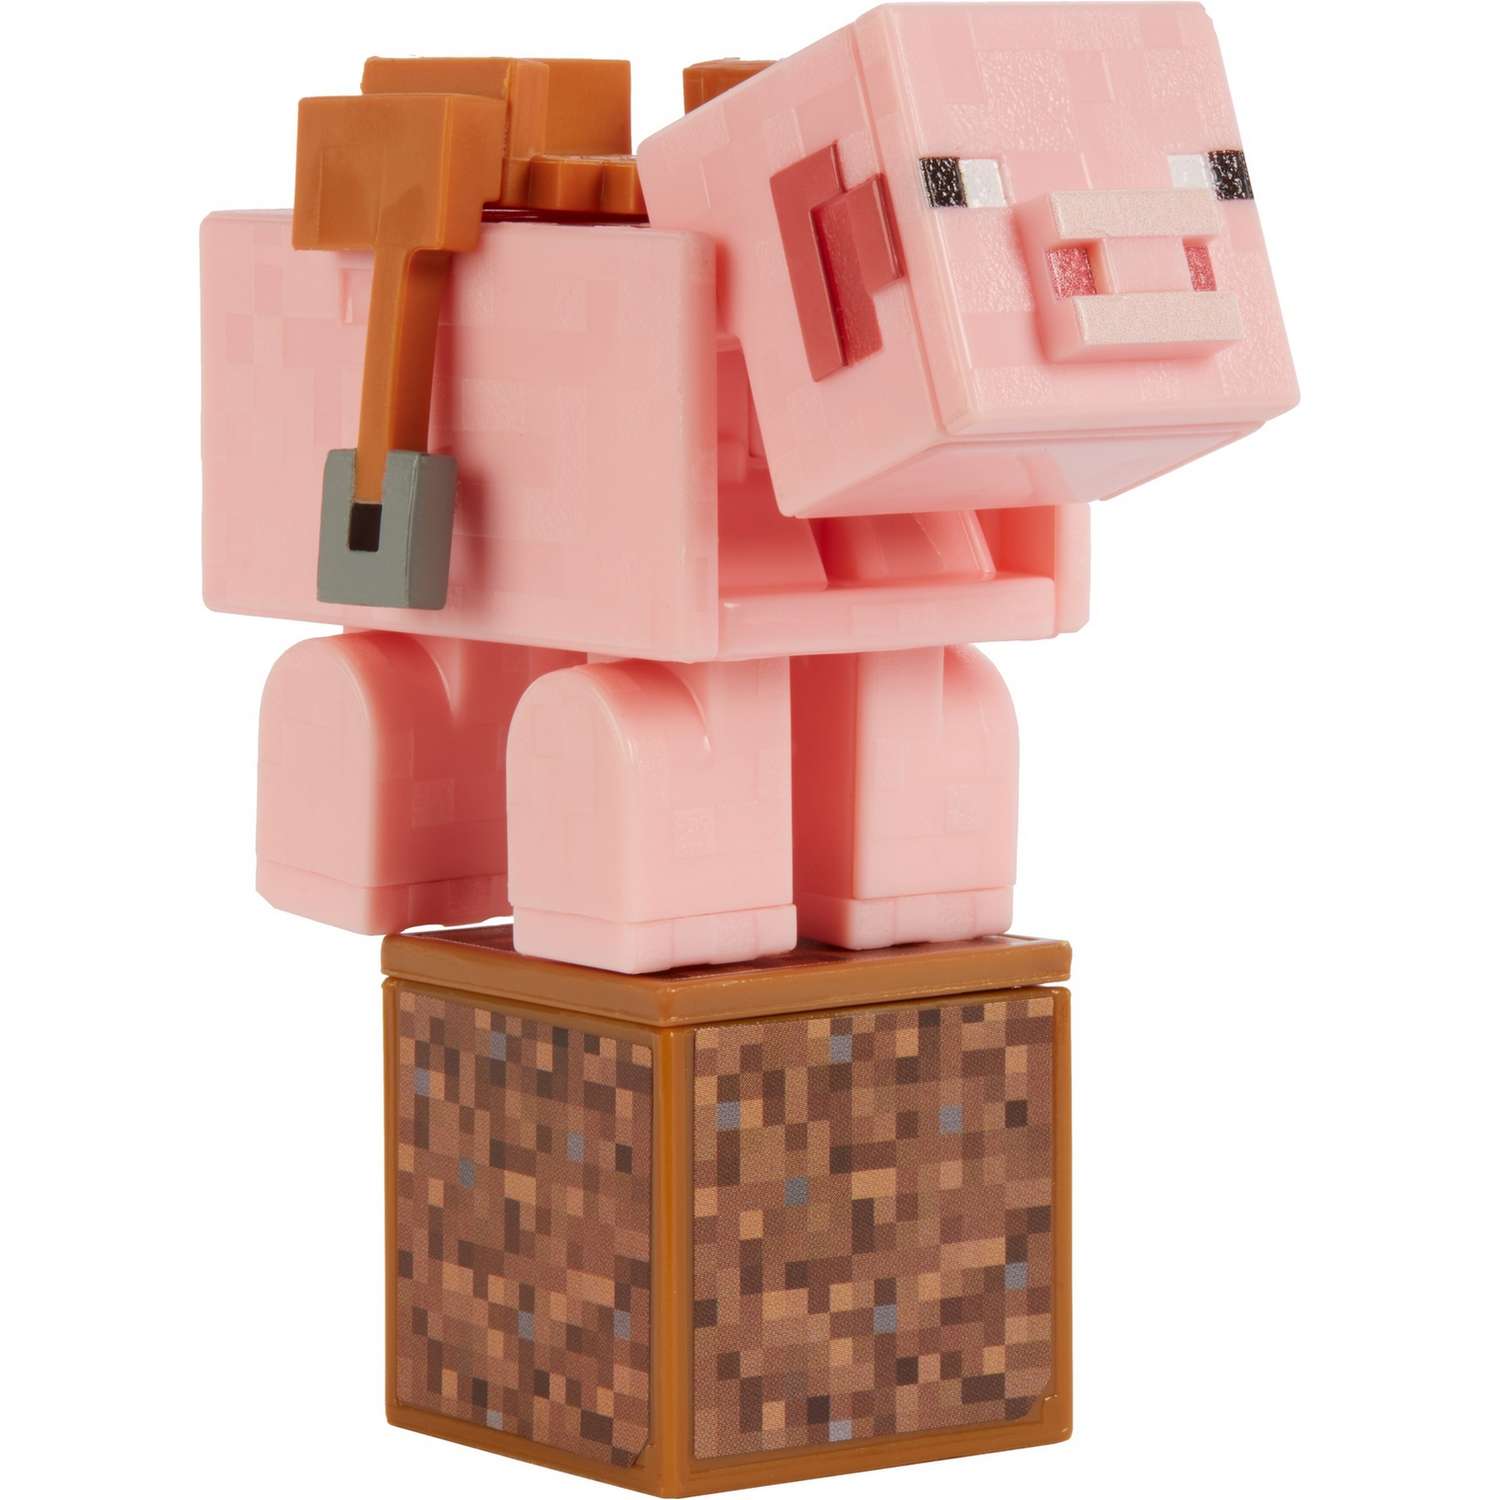 Фигурка Minecraft Свинья с аксессуарами GGP94 - фото 4